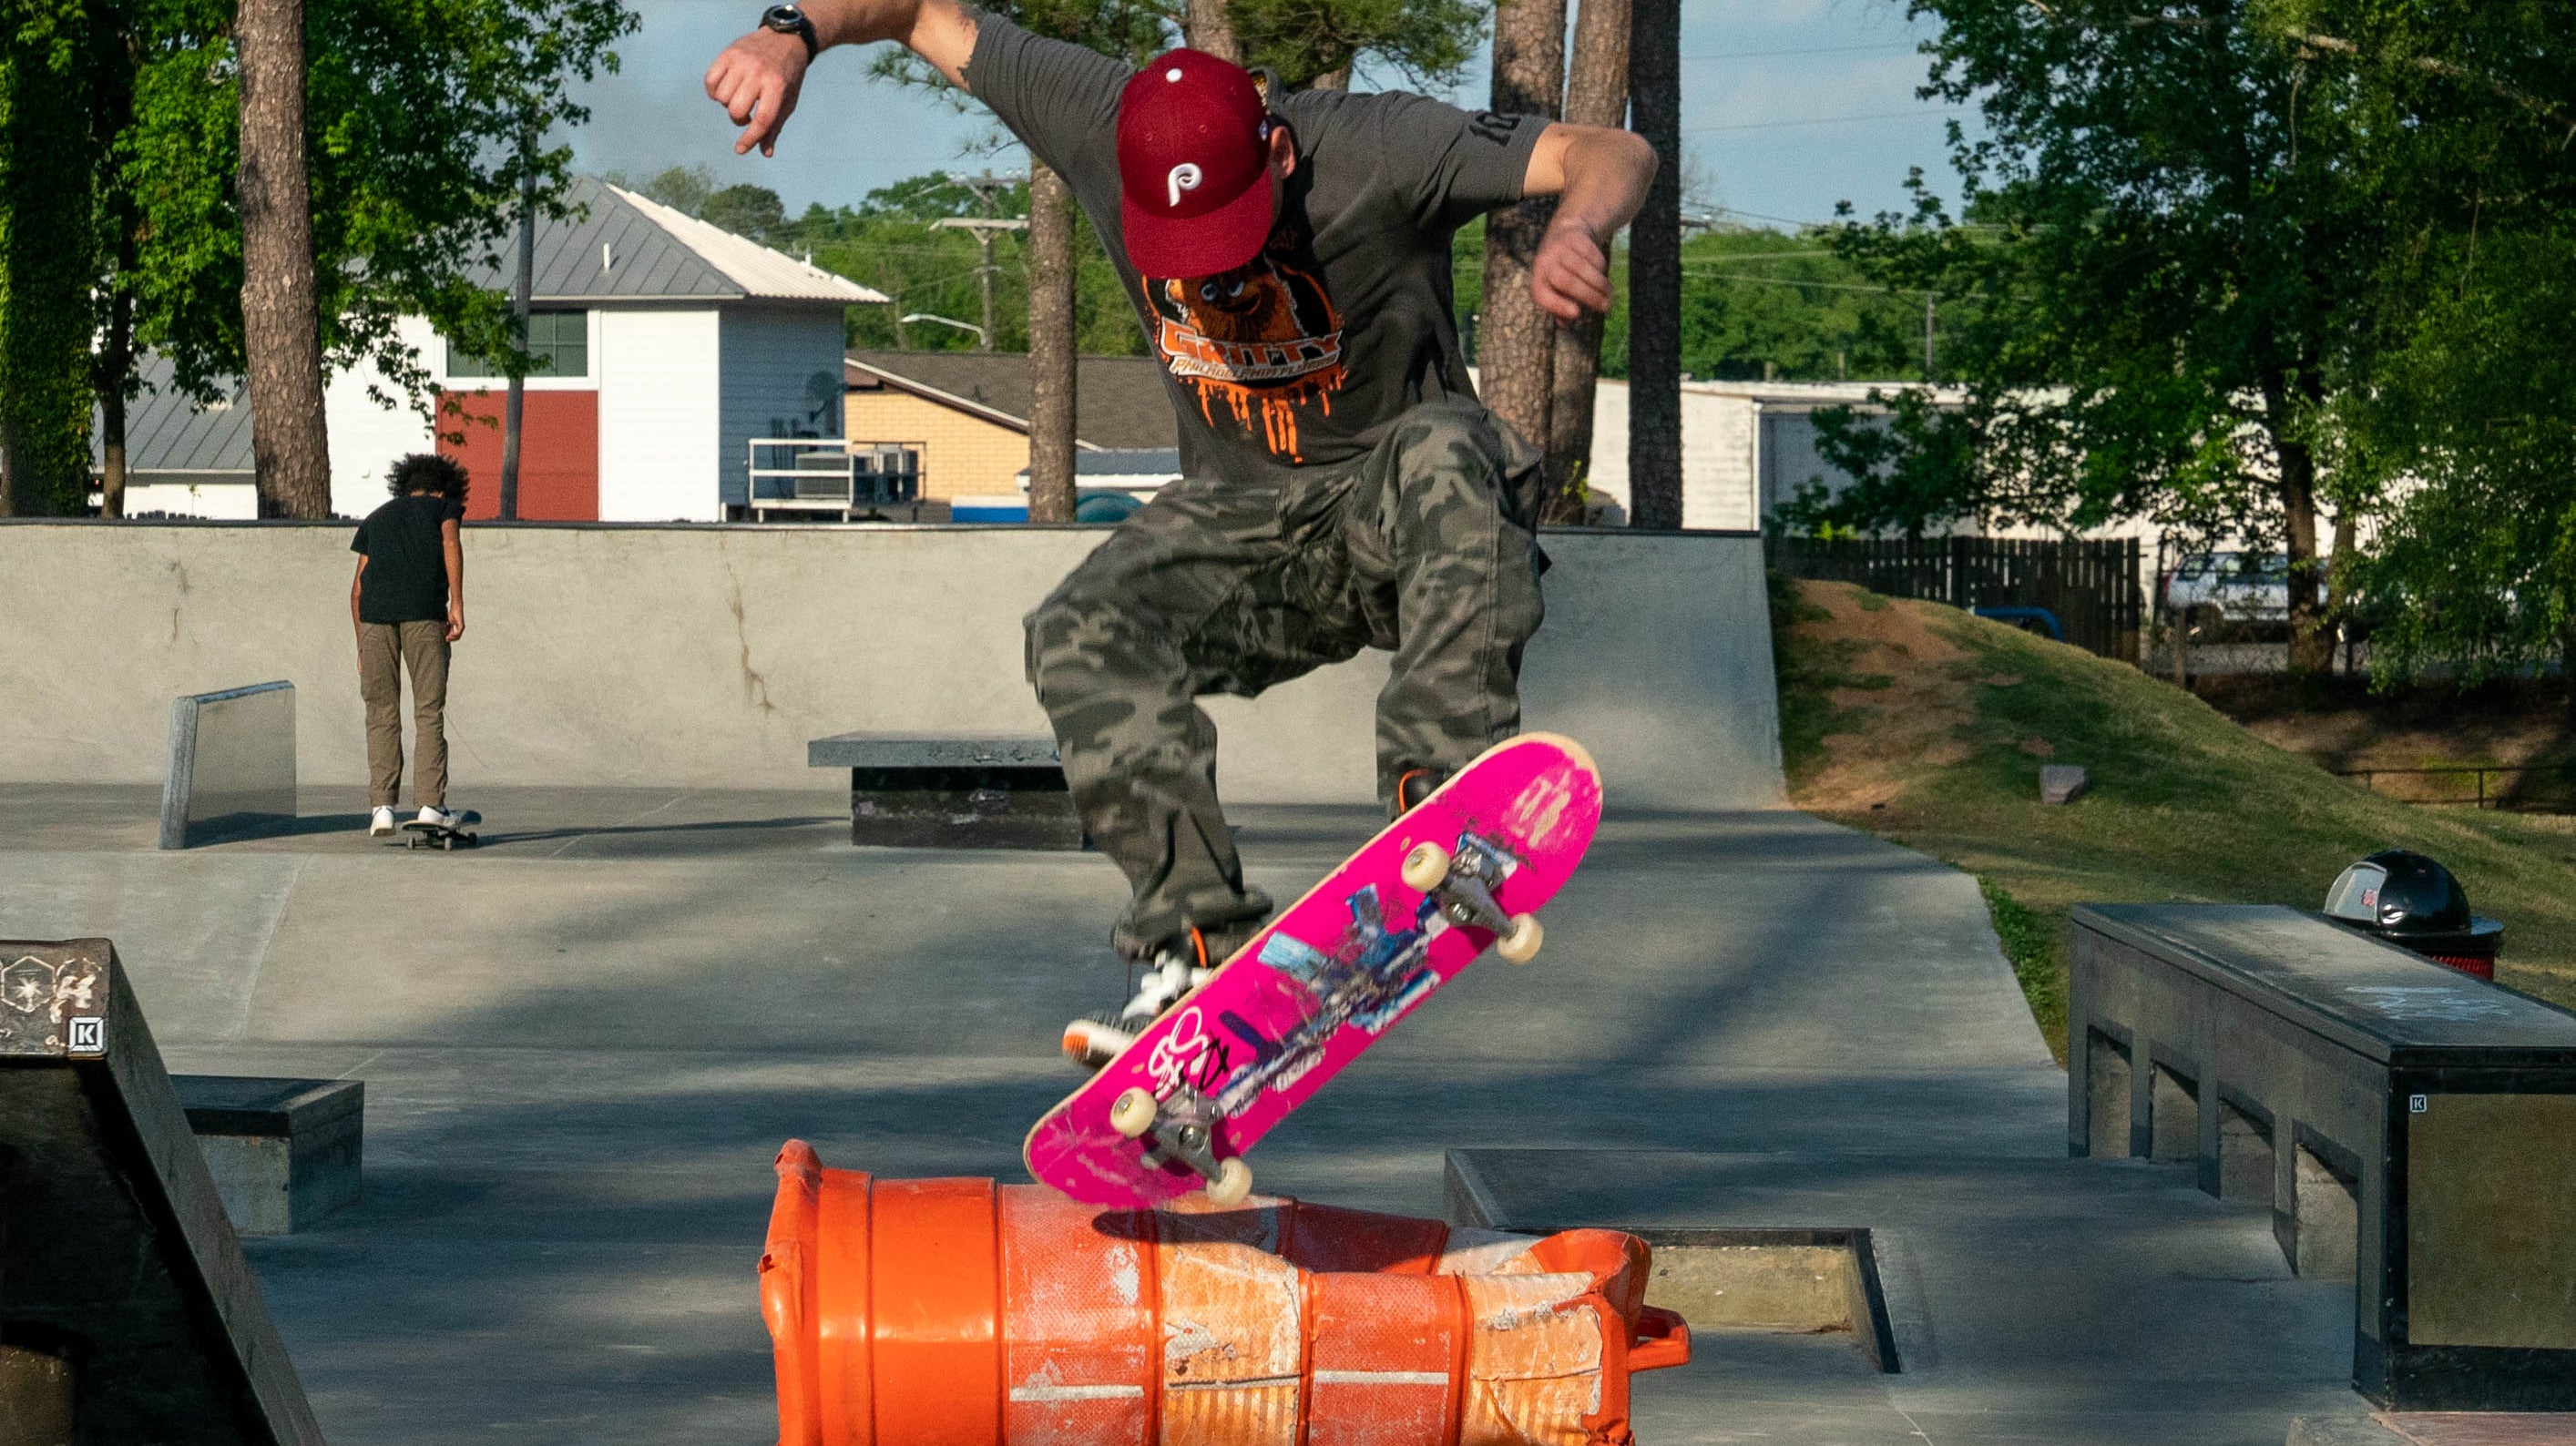 Raid Skateboards Rider Skateboarding for mental health benifits